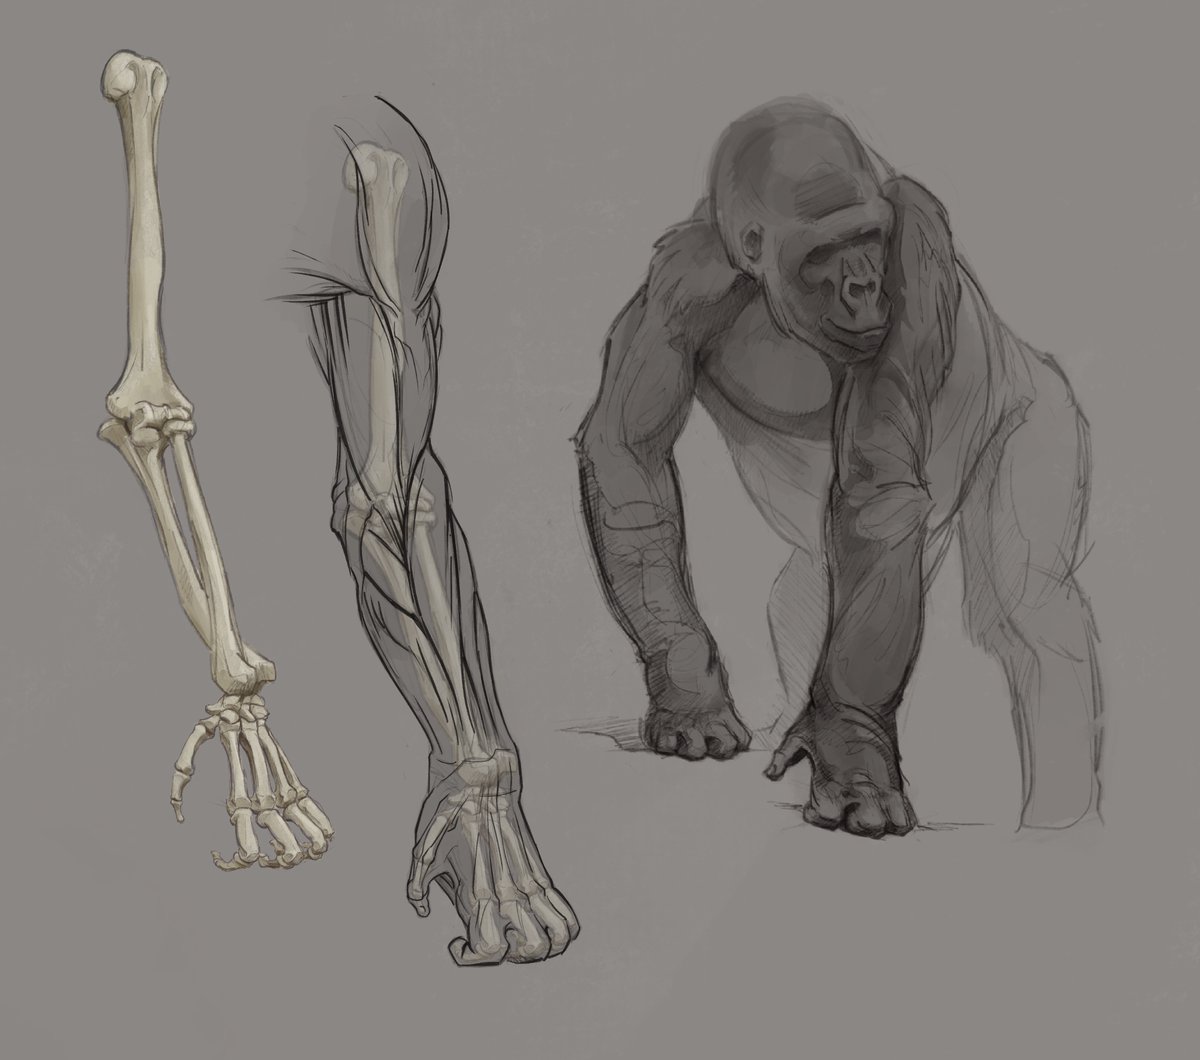 More illustrations on gorilla anatomy #apes #primates #art #sciart #gorilla